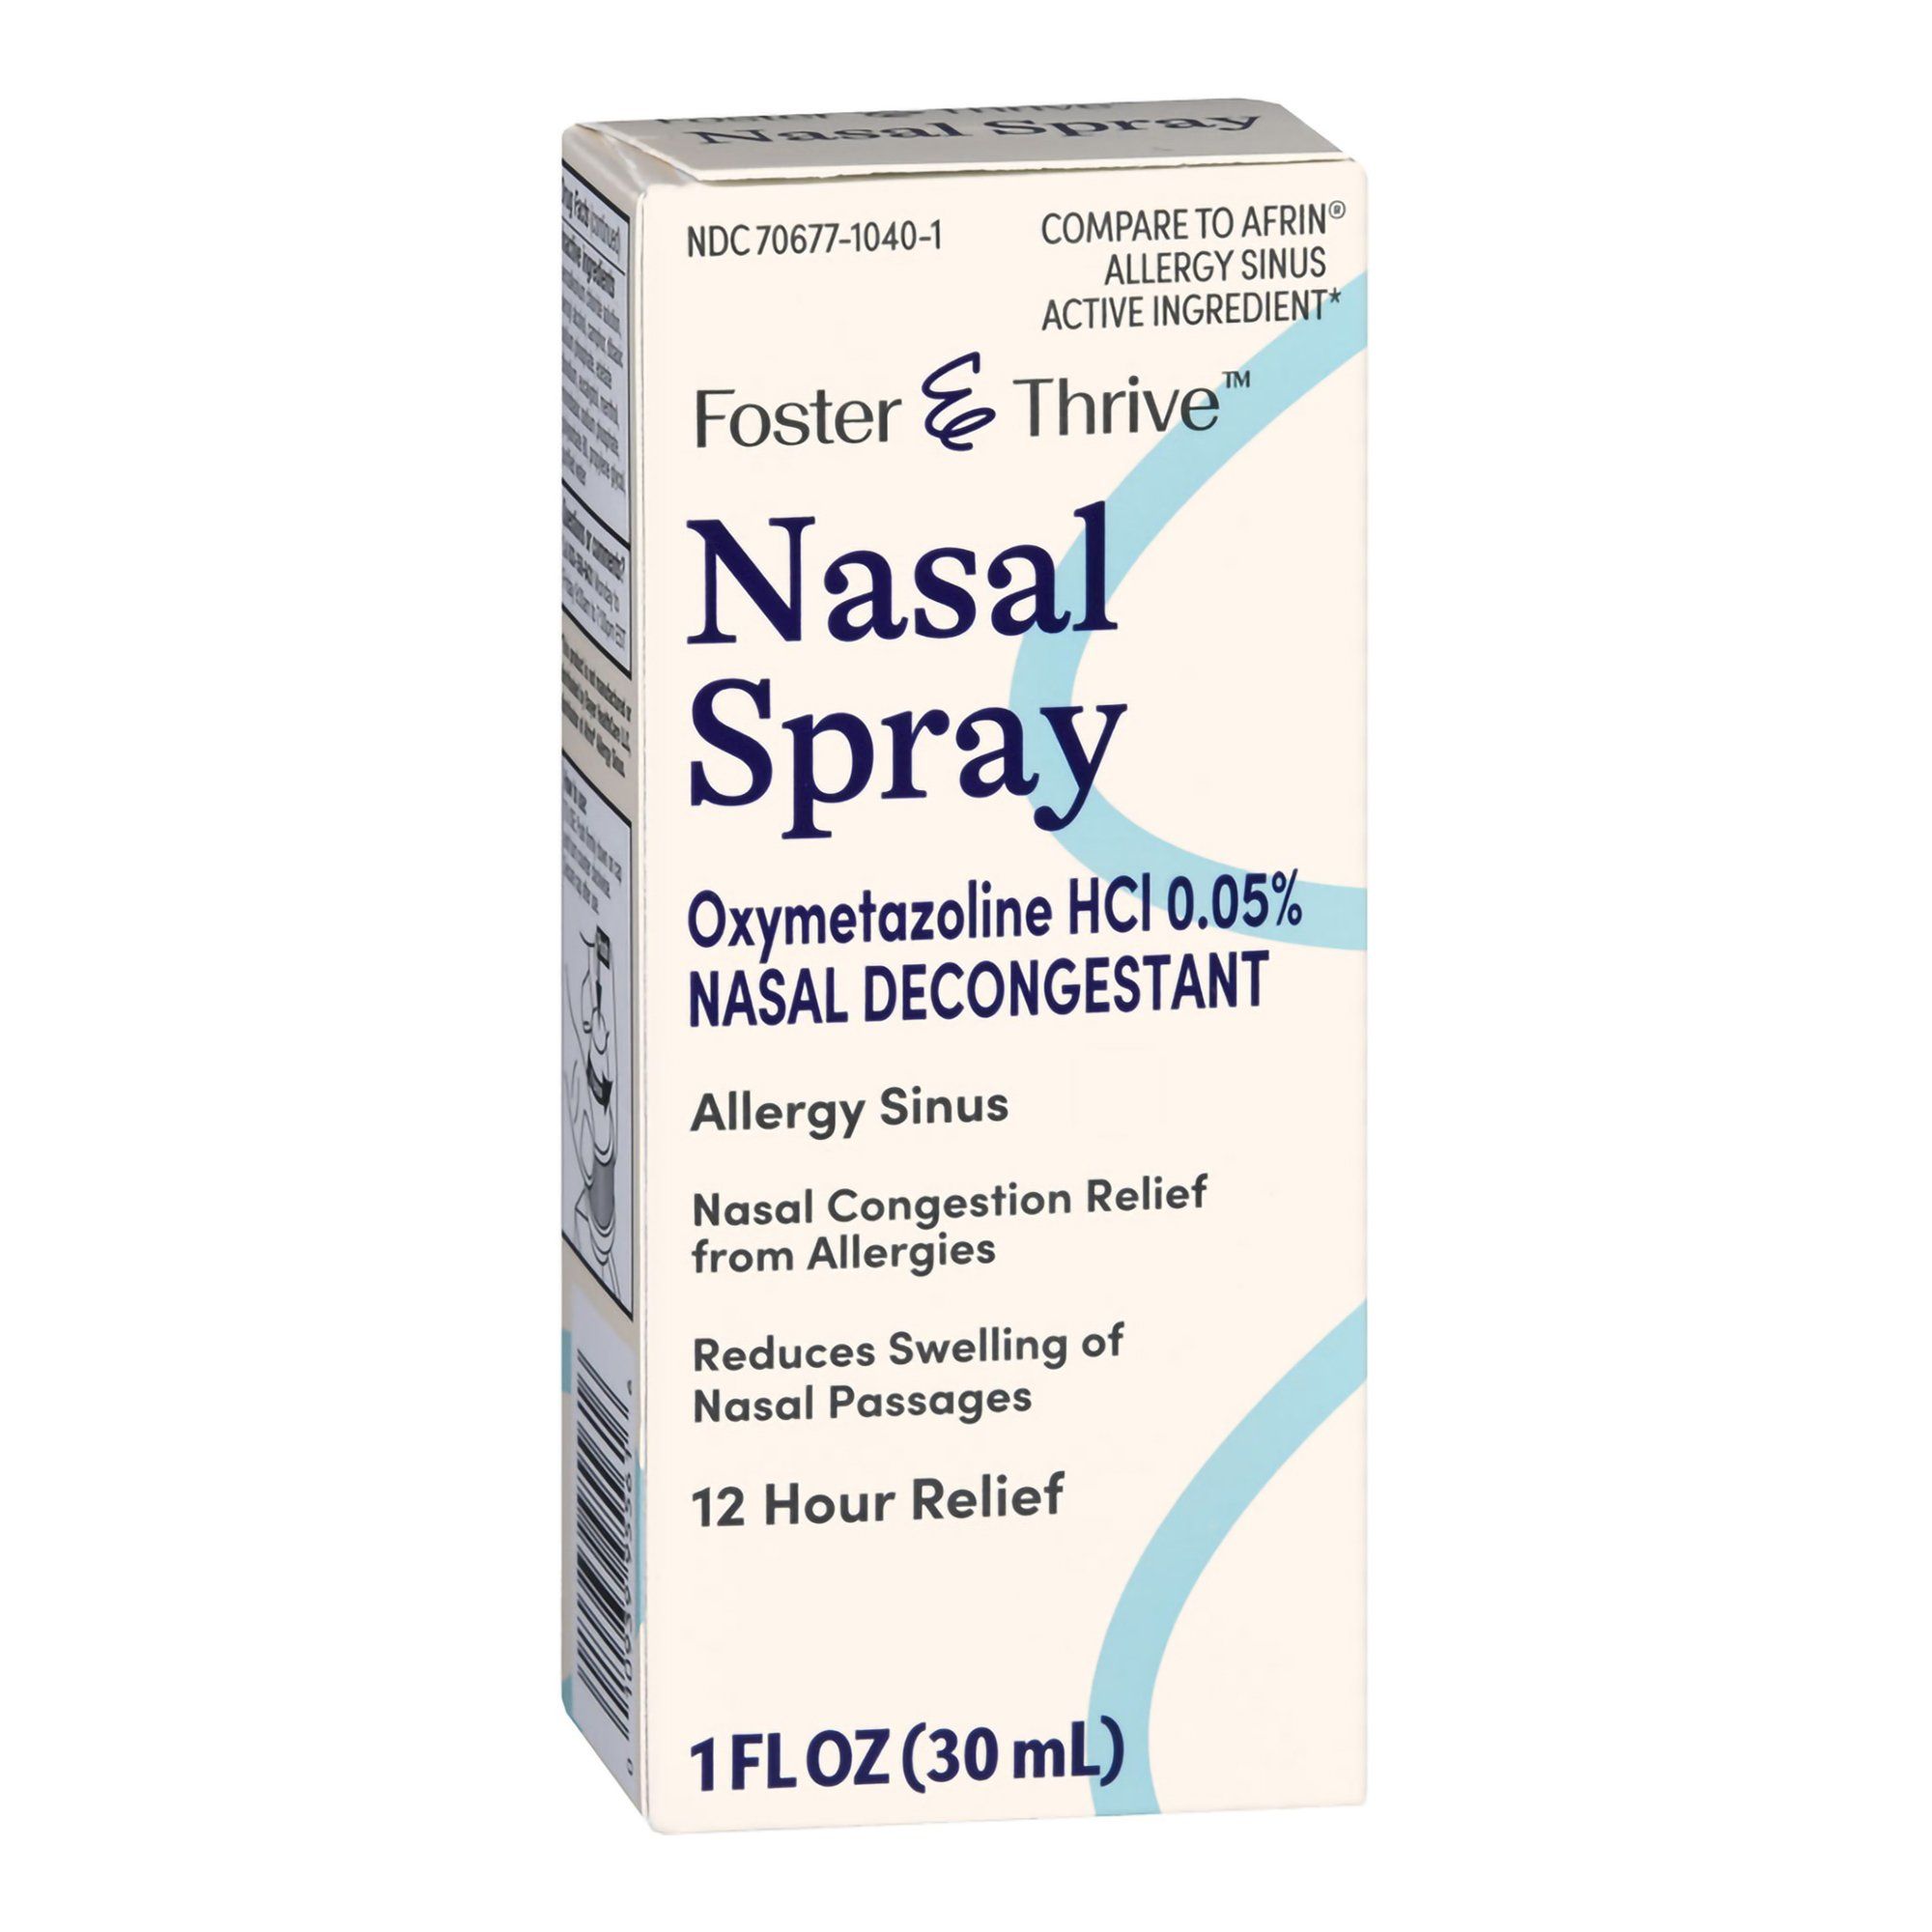 Foster & Thrive Oxymetazoline Hydrochloride 0.05% Allergy Sinus Nasal Spray - 1 fl oz